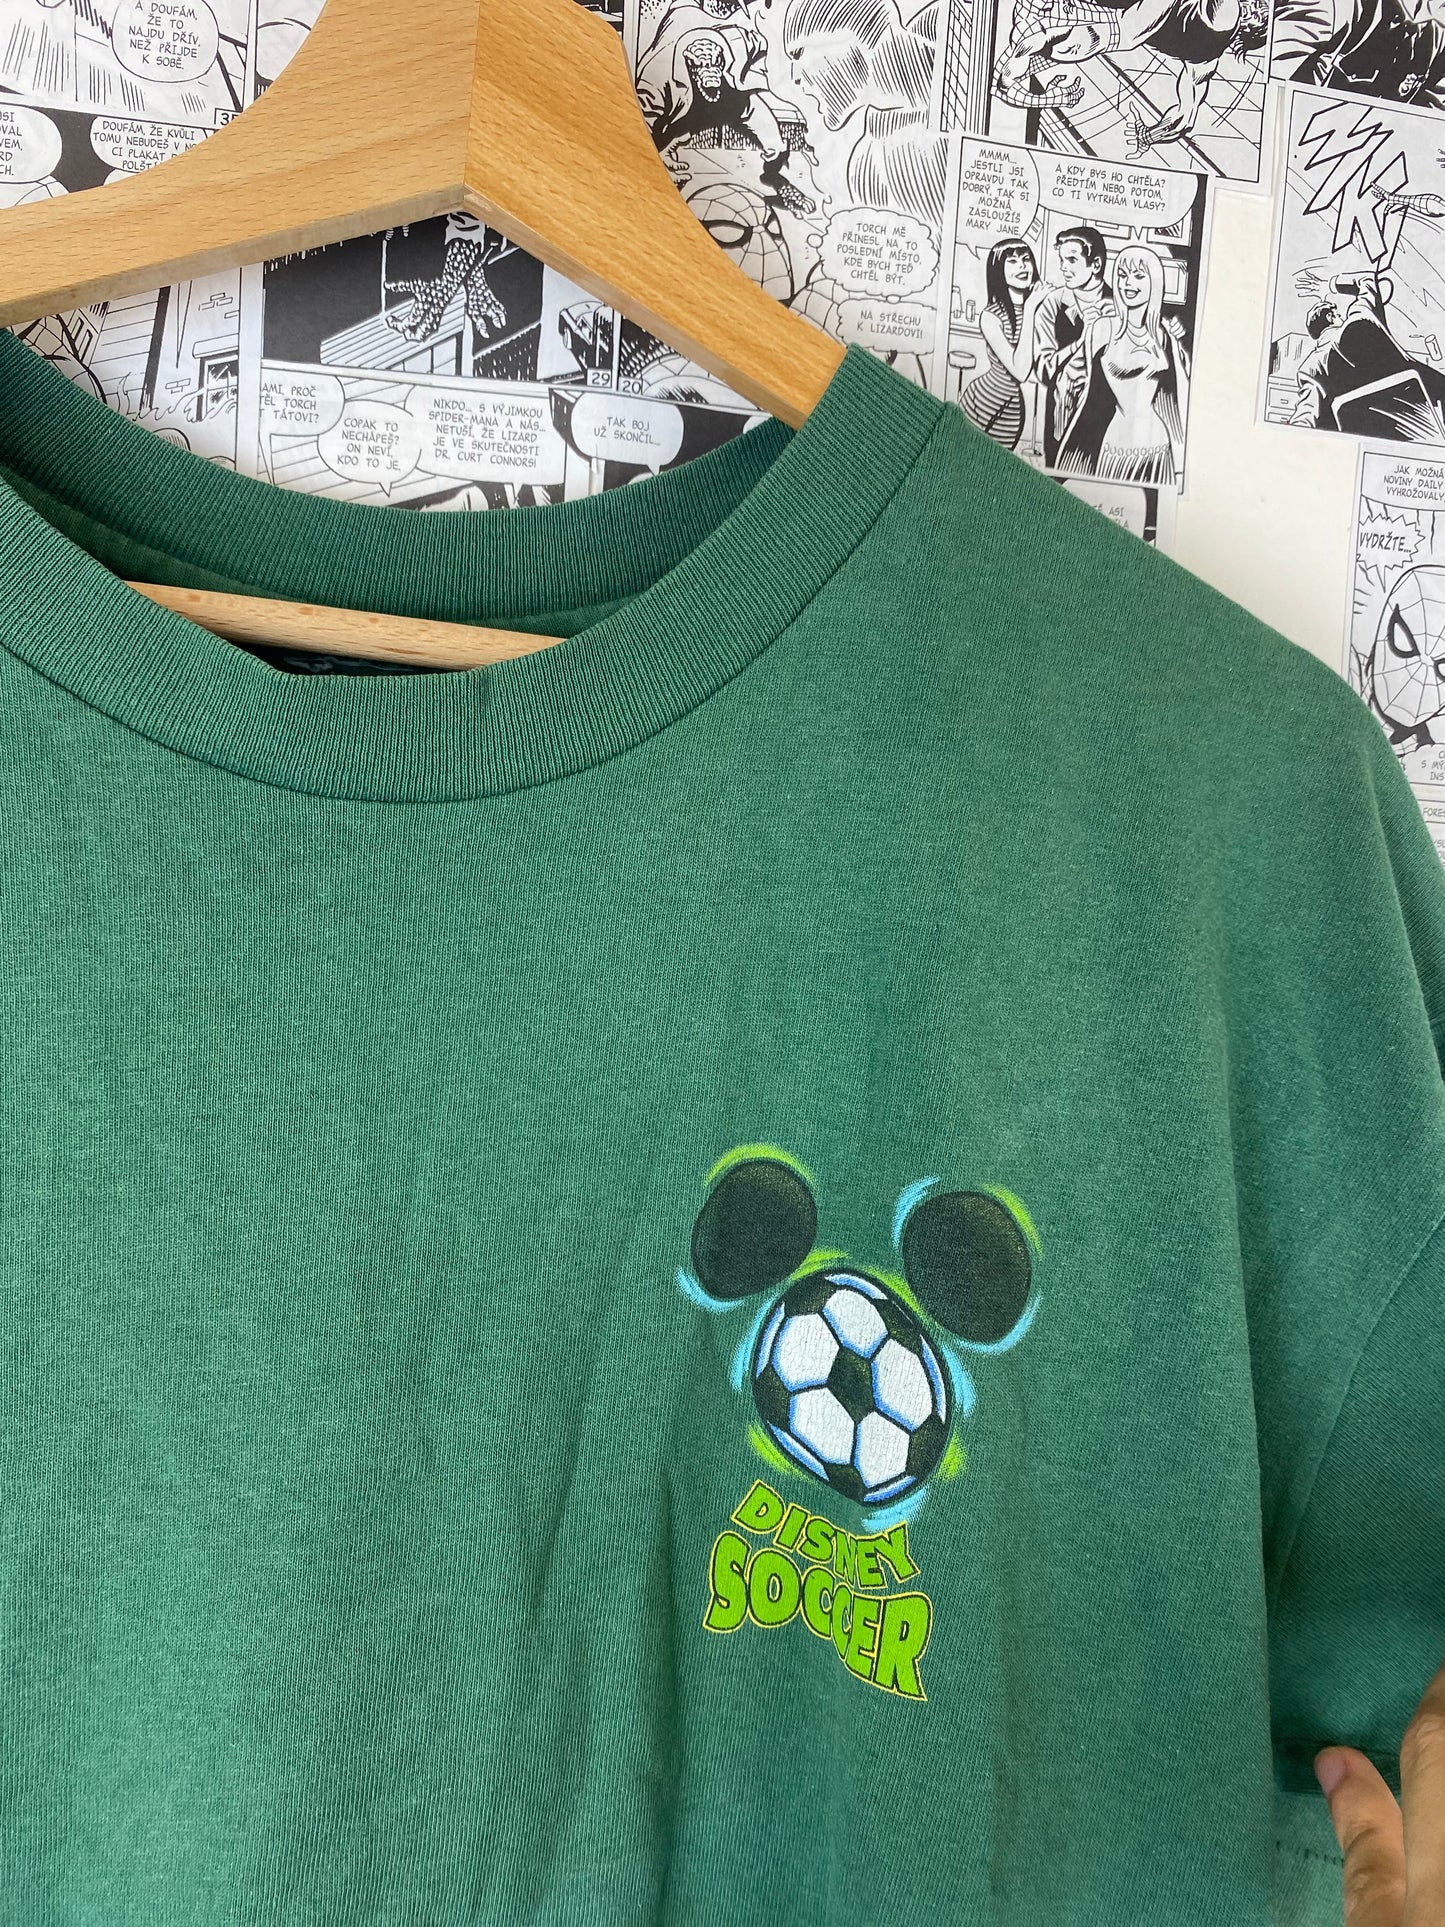 Vintage Disney Soccer 90s t-shirt - size L